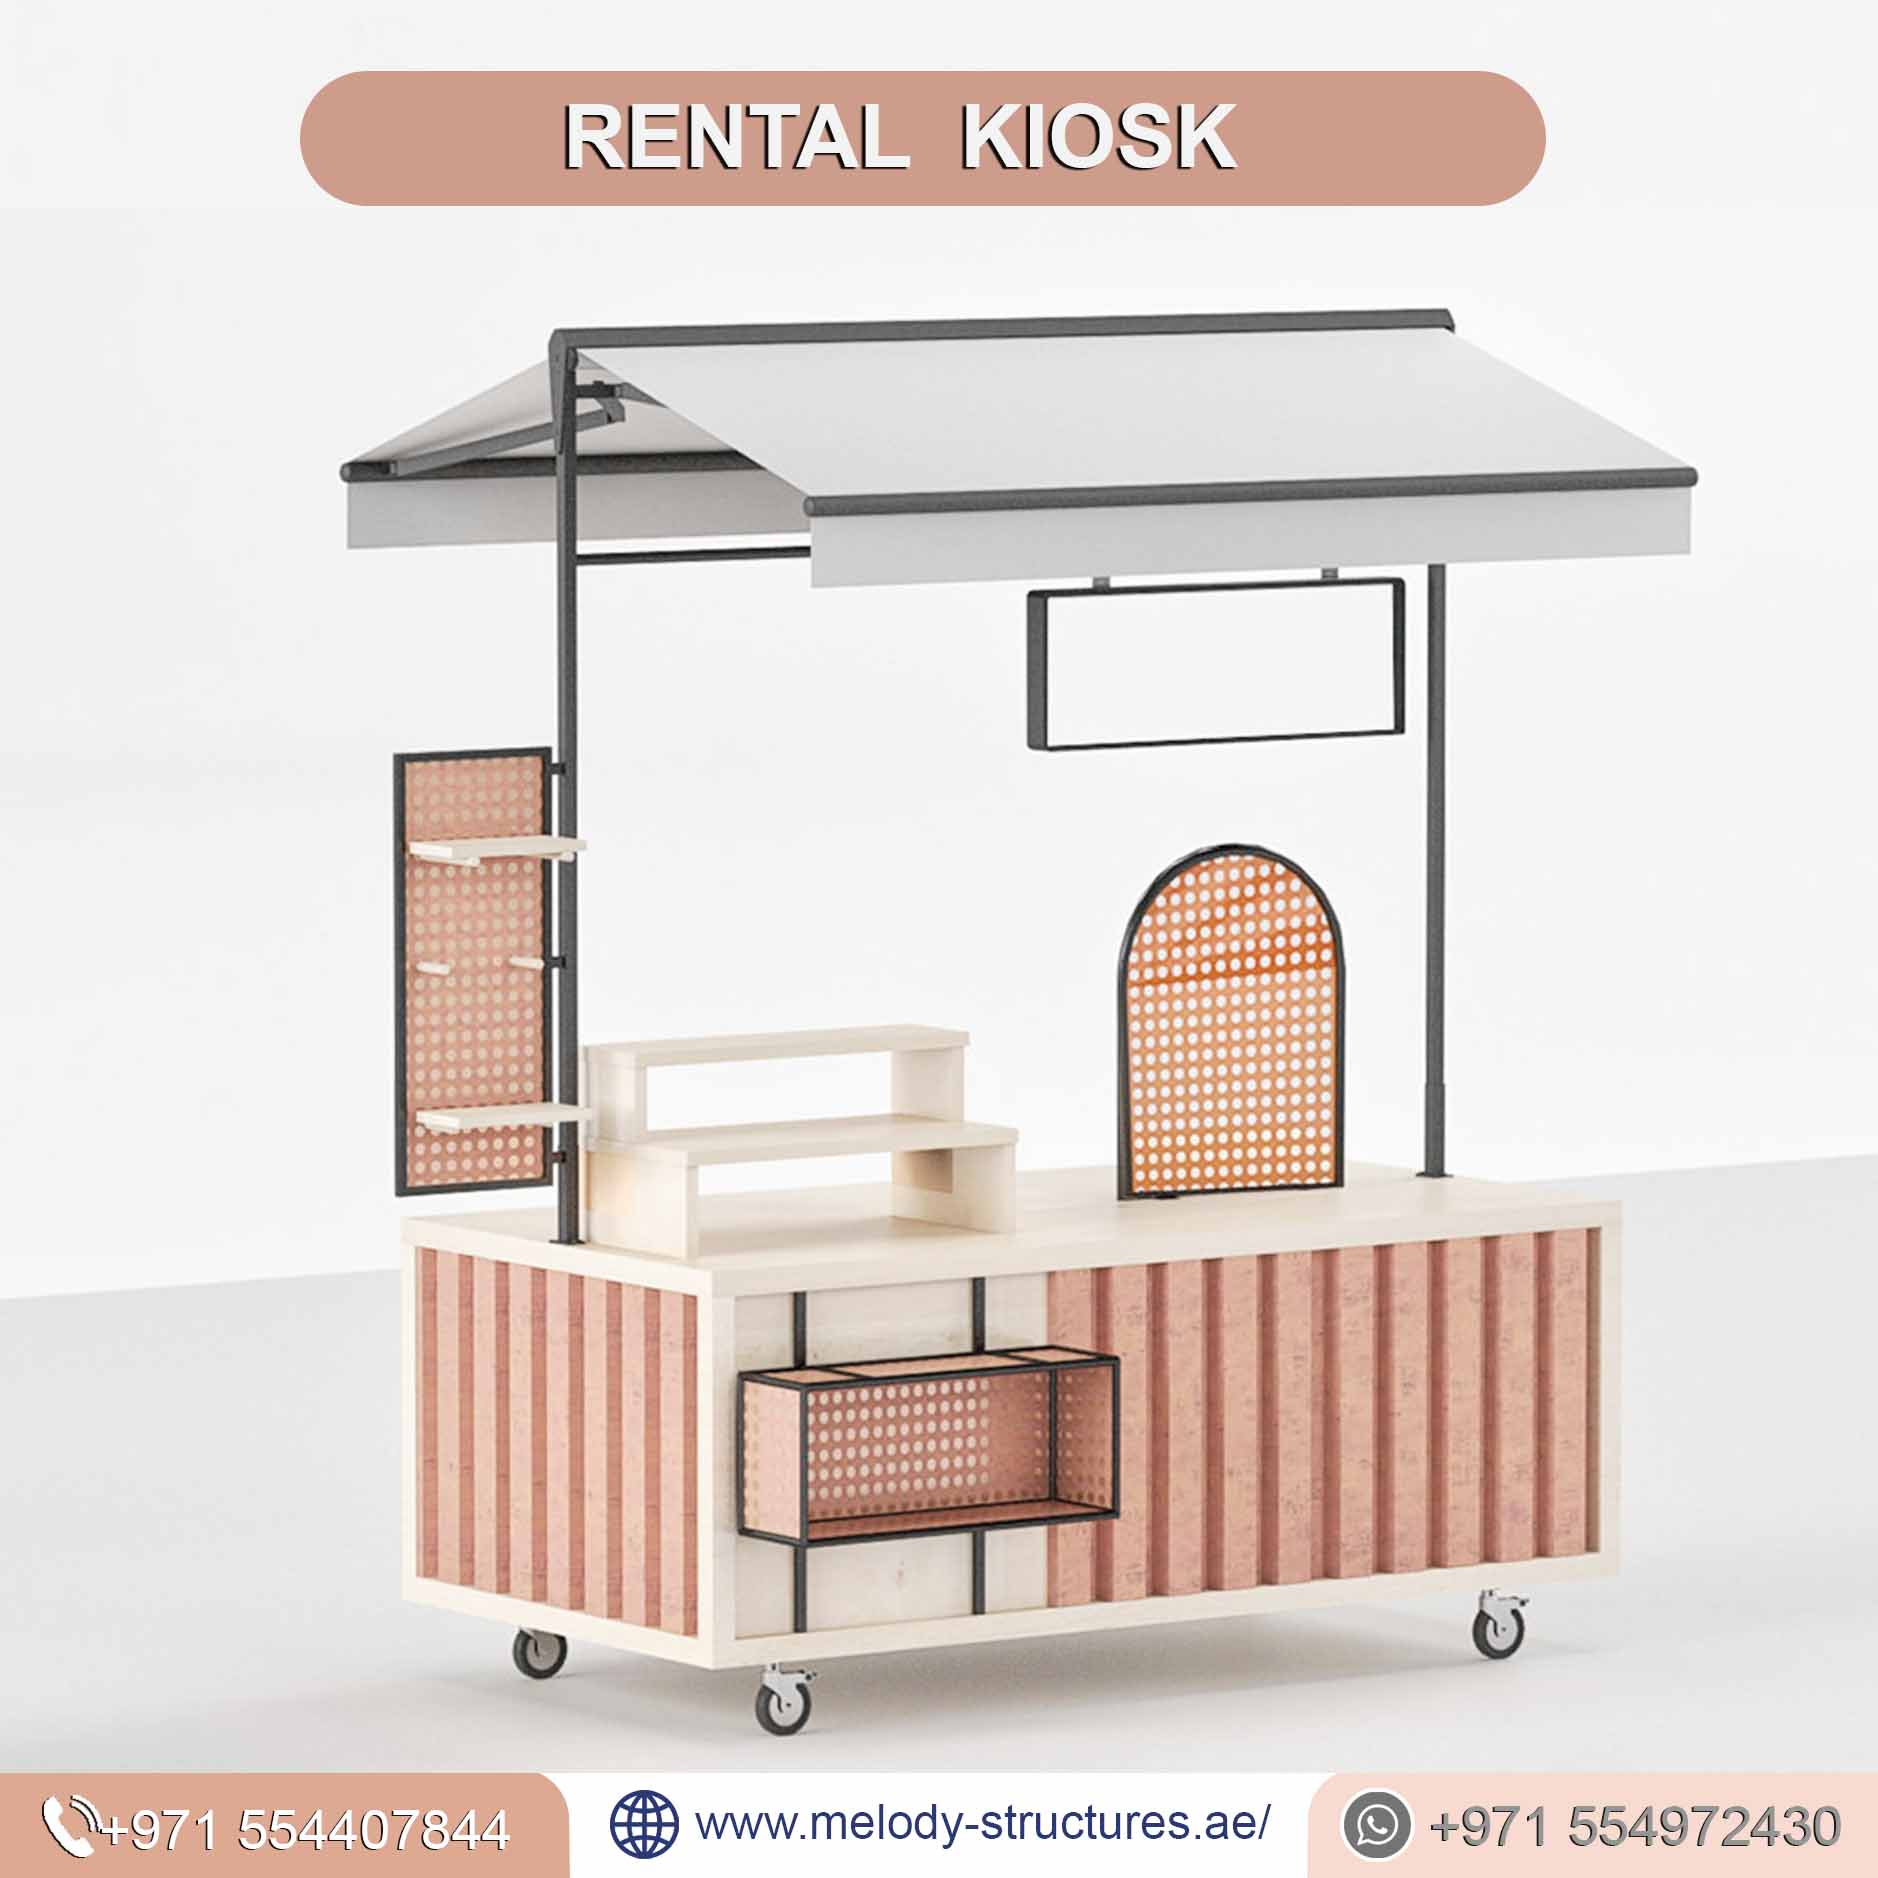 Retail-Kiosk-On-Rent-rental-Kiosk-in-UAE-Free-Delivery (2).jpg